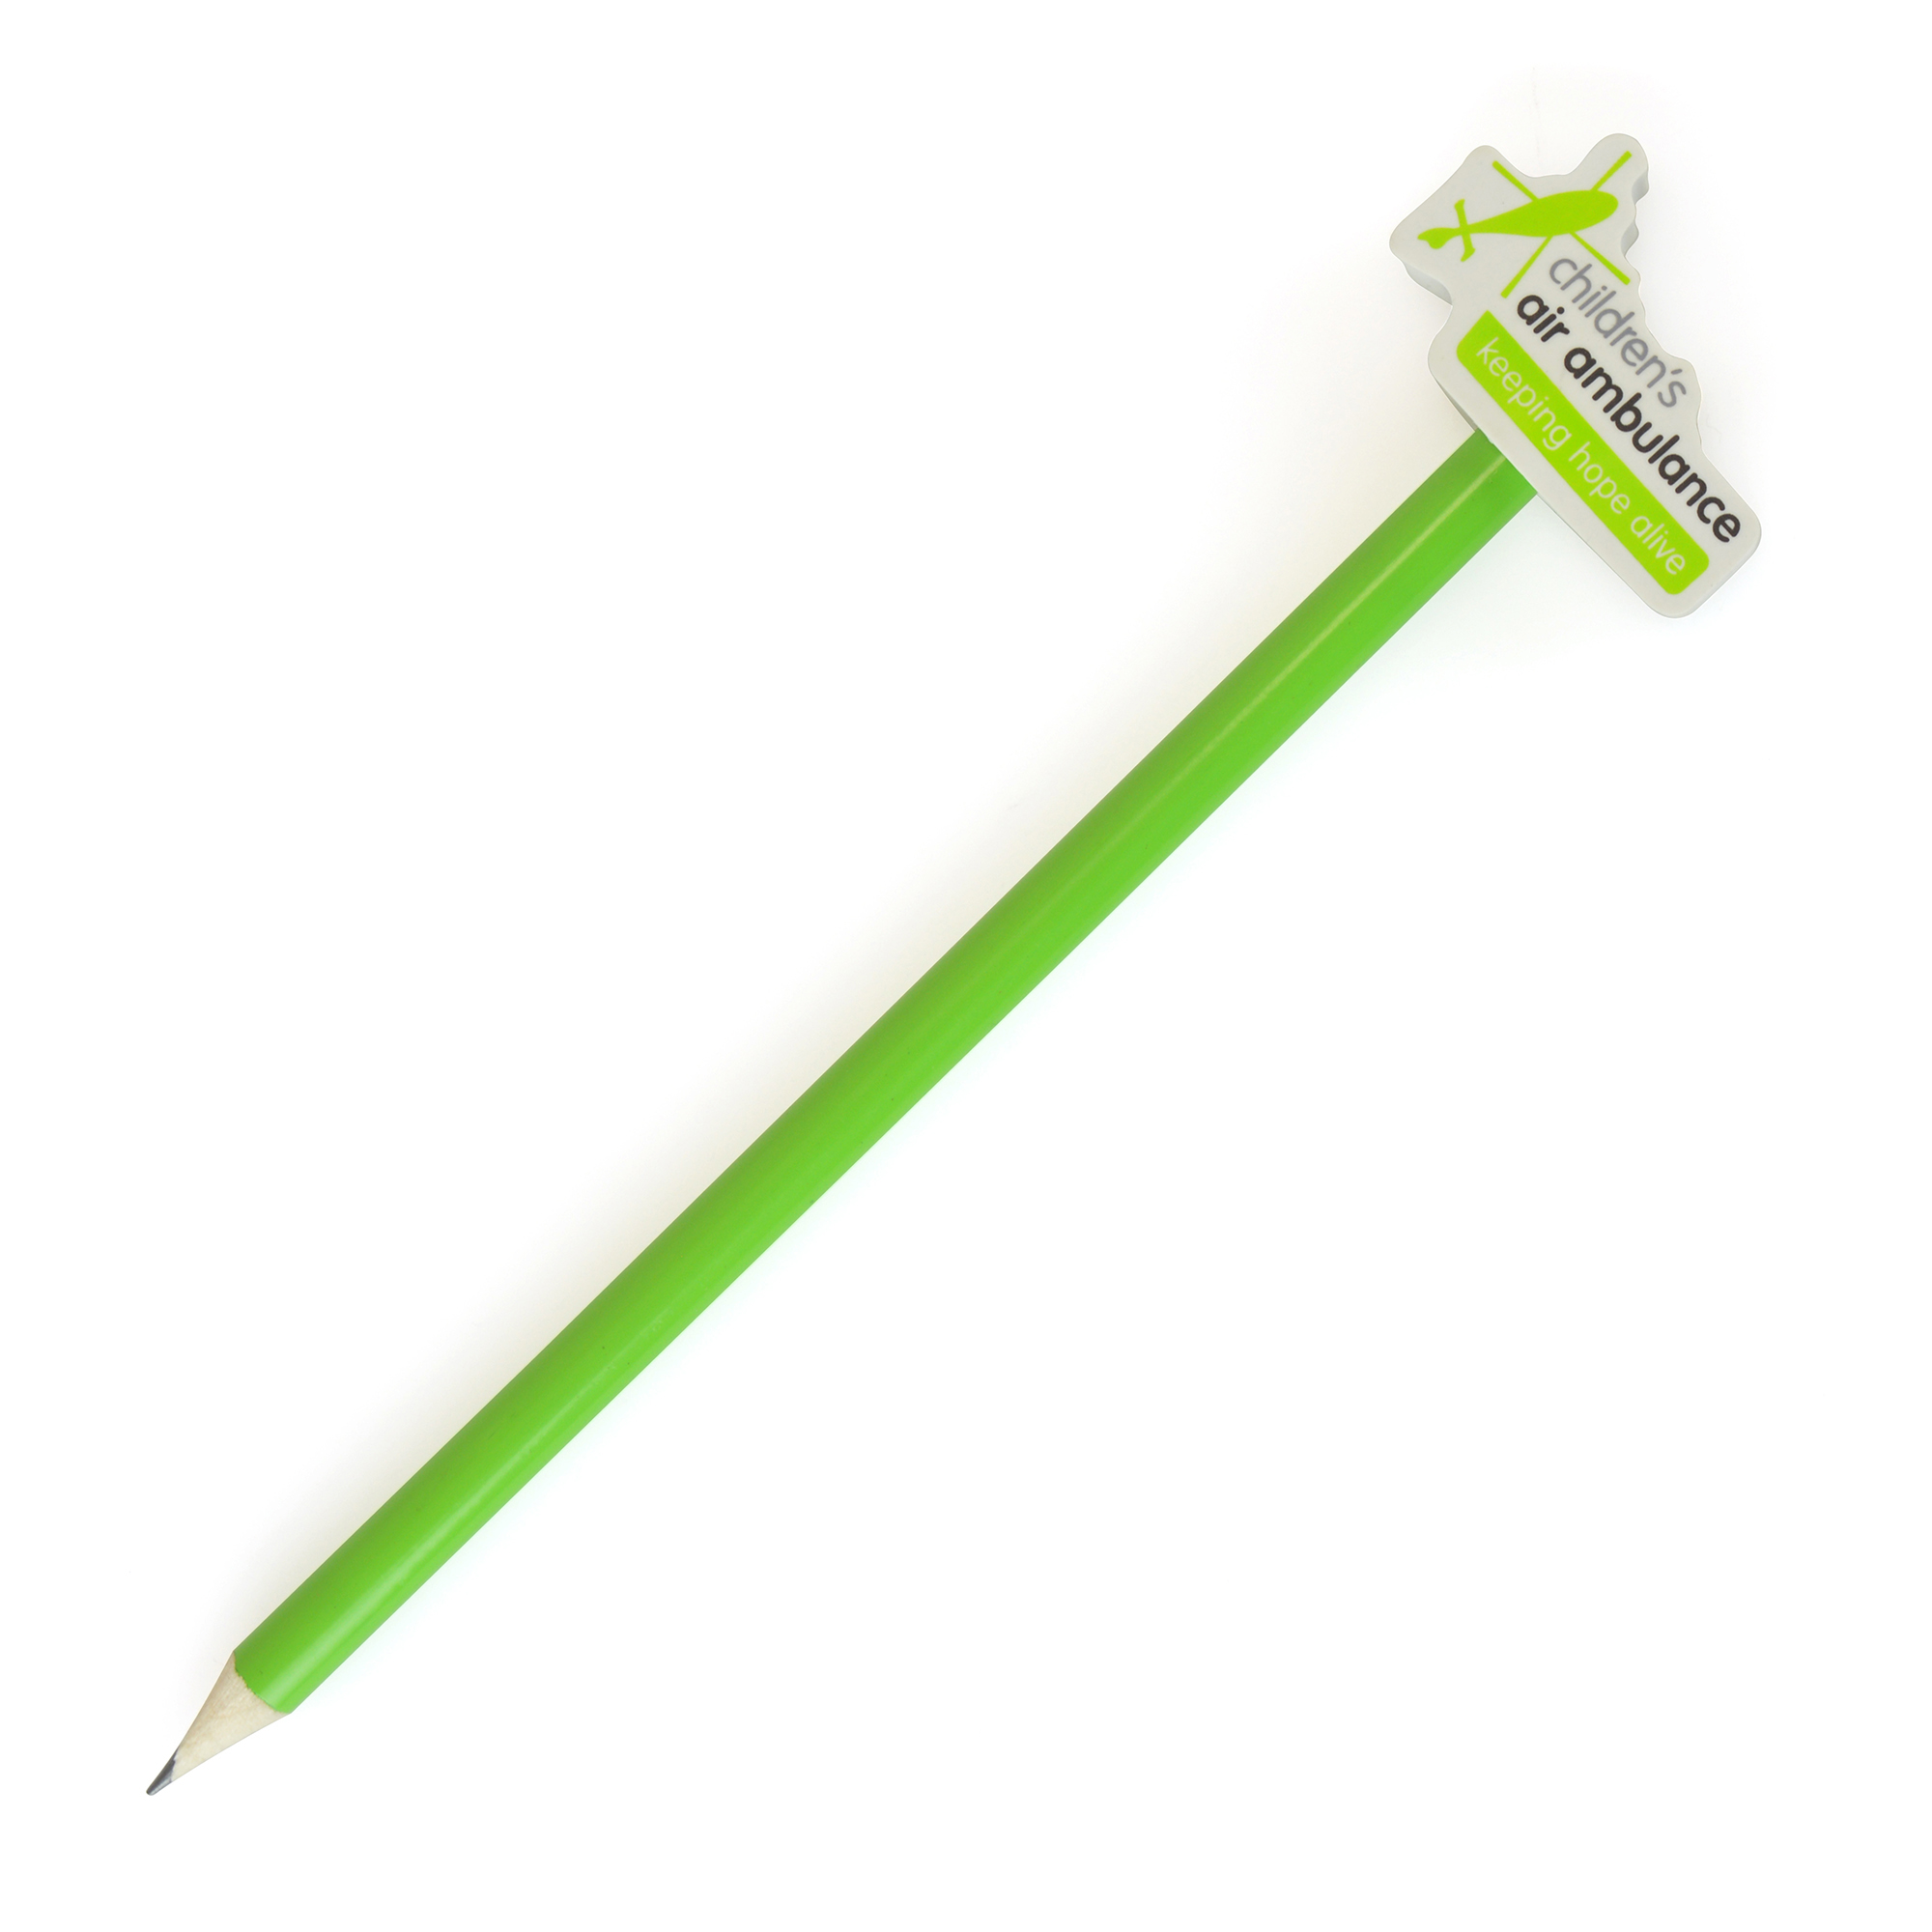 Pencil With Bespoke Eraser